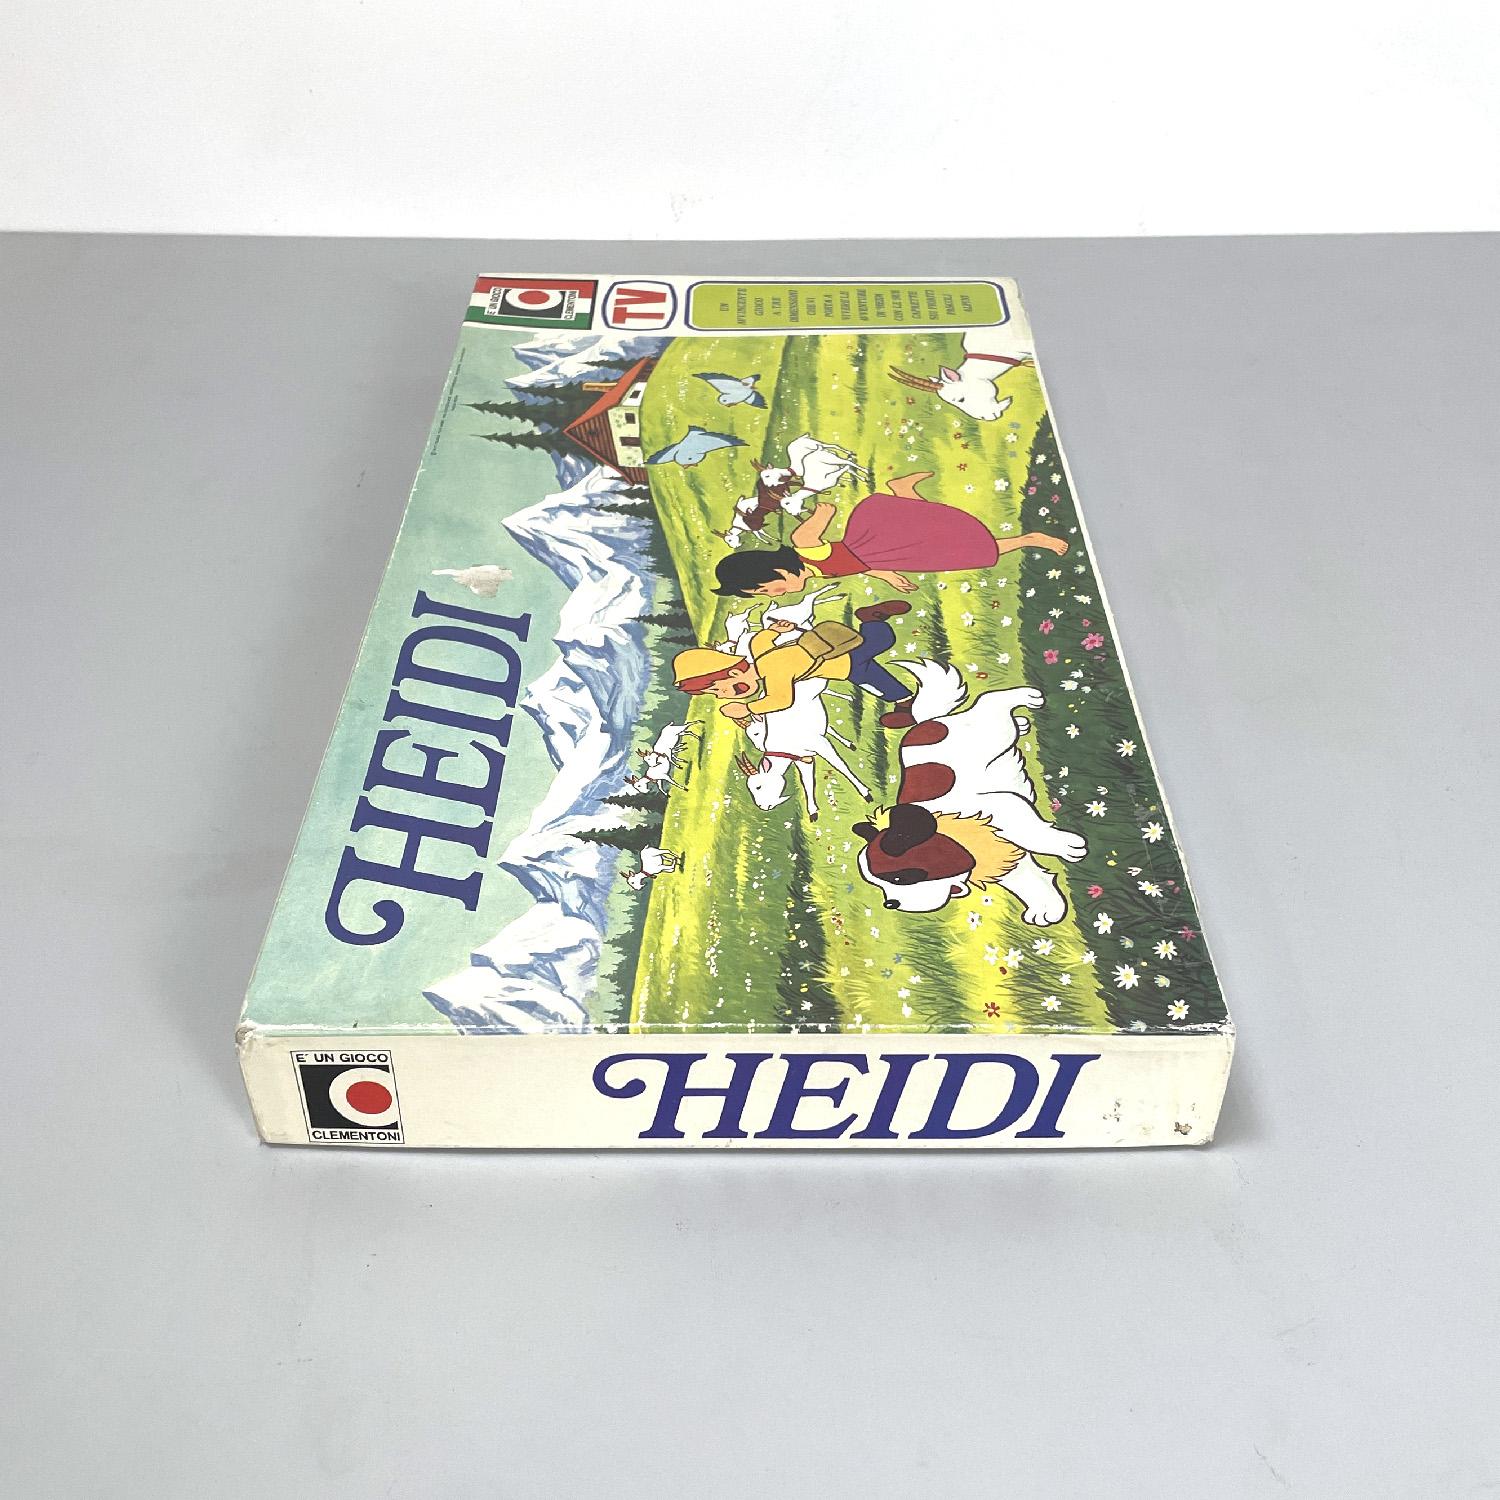 Plastic Italian modern Heidi board game by Clementoni, 1980s For Sale